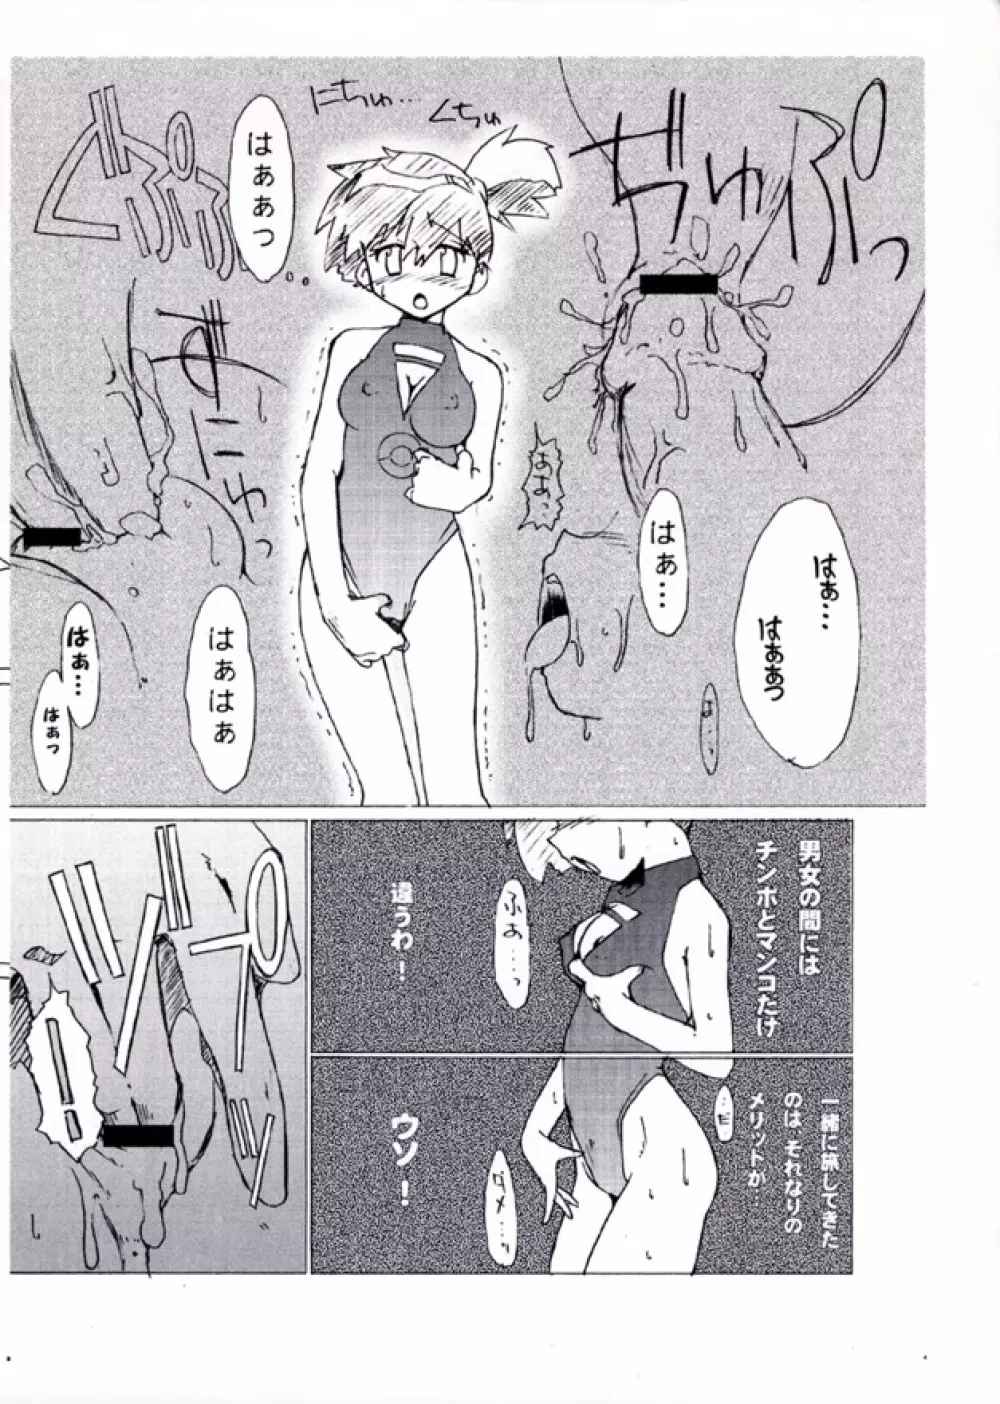 KASUMIX XPLOSION Kasumi Comic part5 - page33